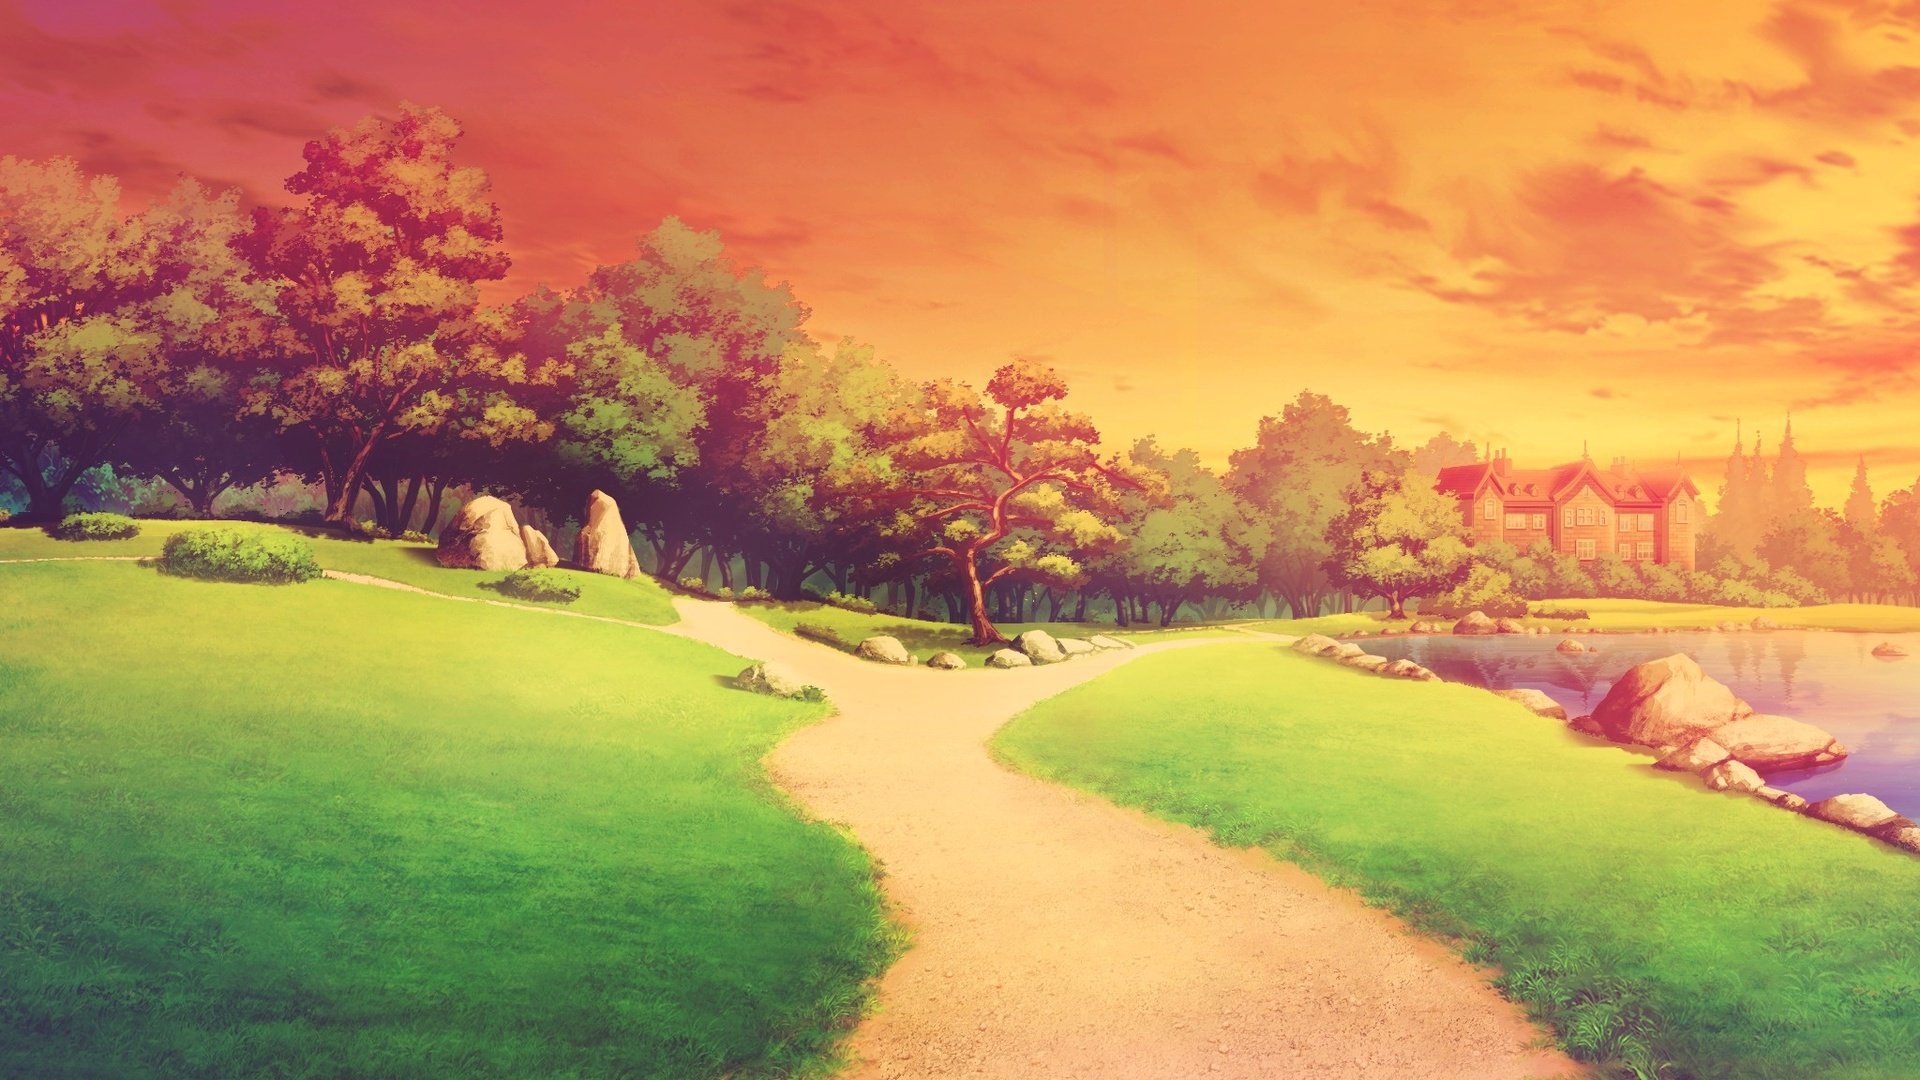 Sunset - Other & Anime Background Wallpapers on Desktop Nexus (Image  2026796)